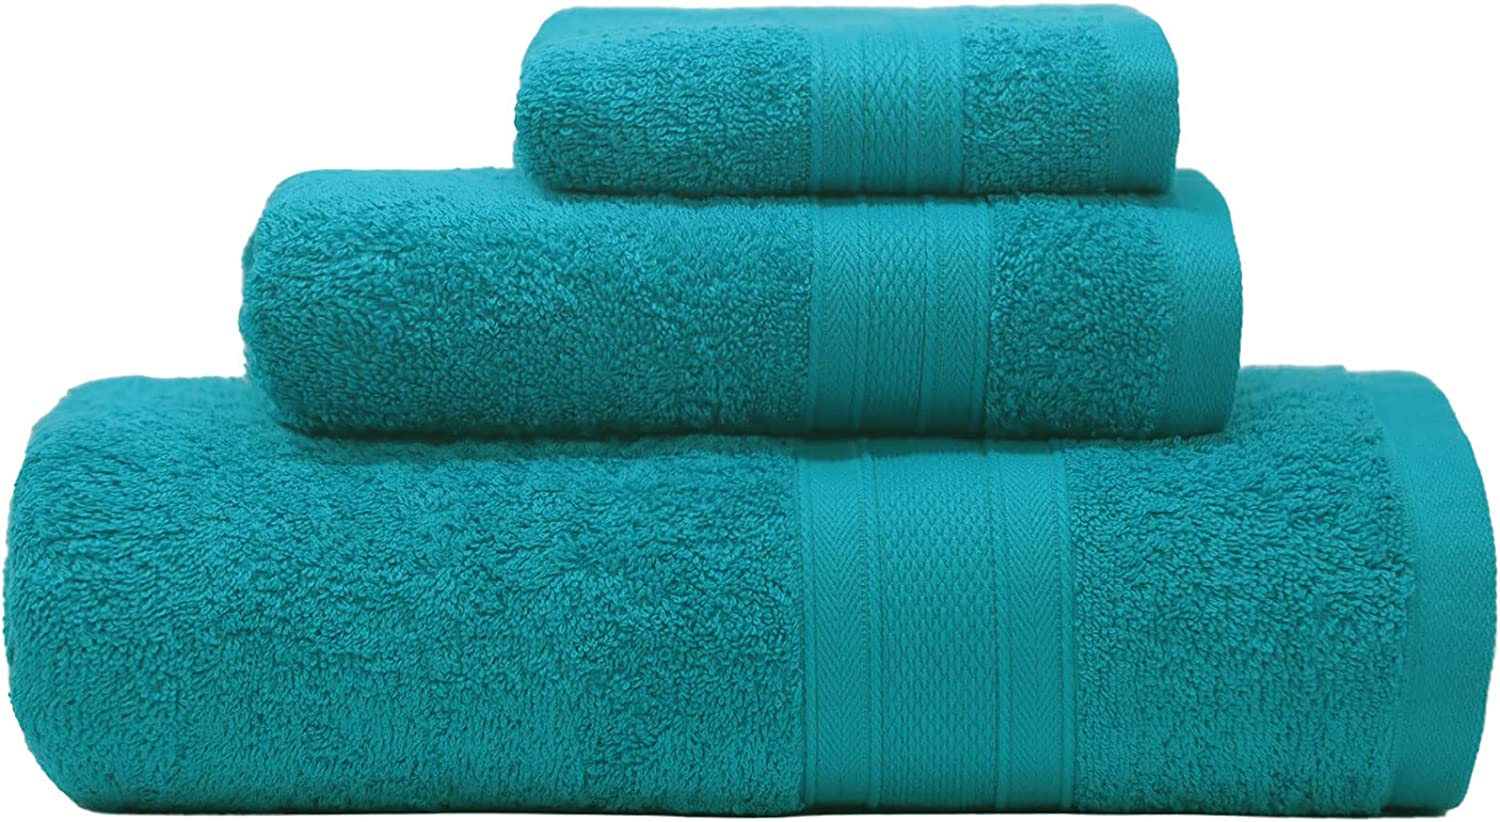 Trident Soft N Plush 6 Piece Cotton Highly Absorbent, Super Soft  Washcloths/Hand/Bath Towels, Black